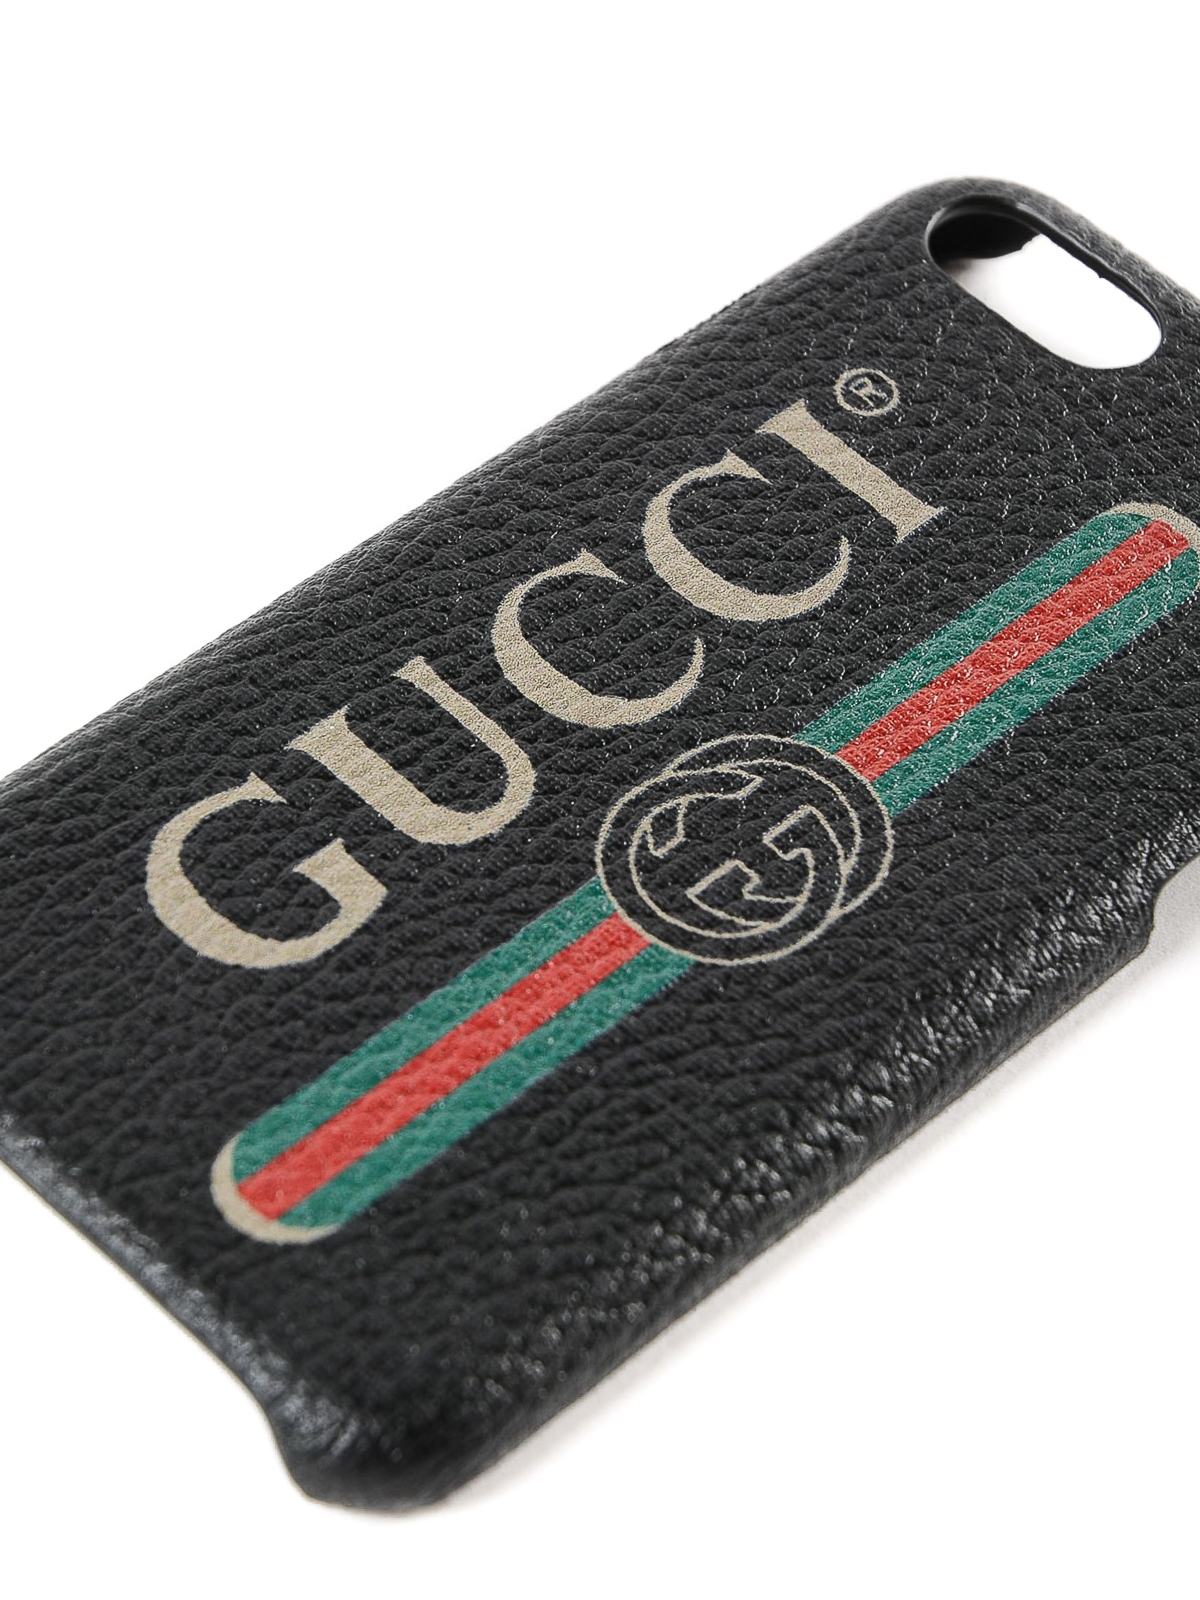 Gucci Gucci Print Iphone 8 Case Cases Covers e